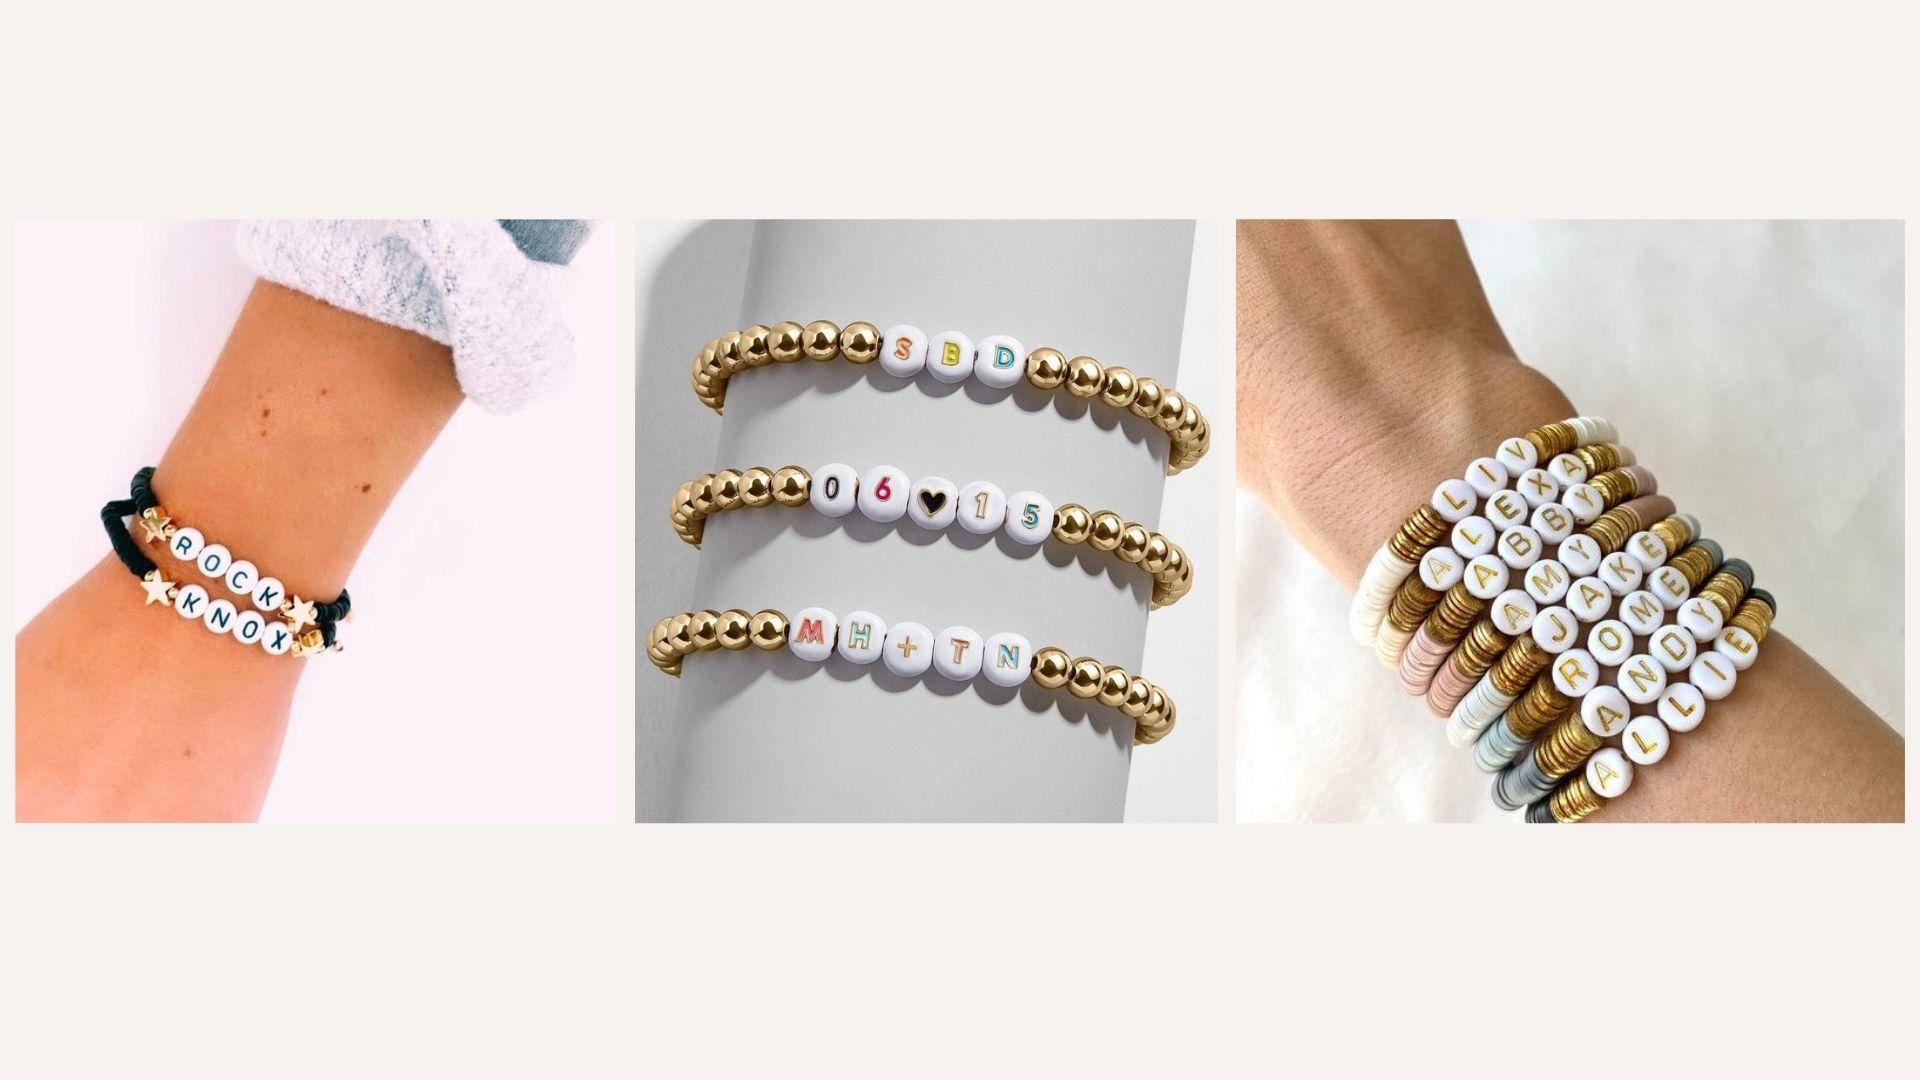 99 Black bead bracelet ideas